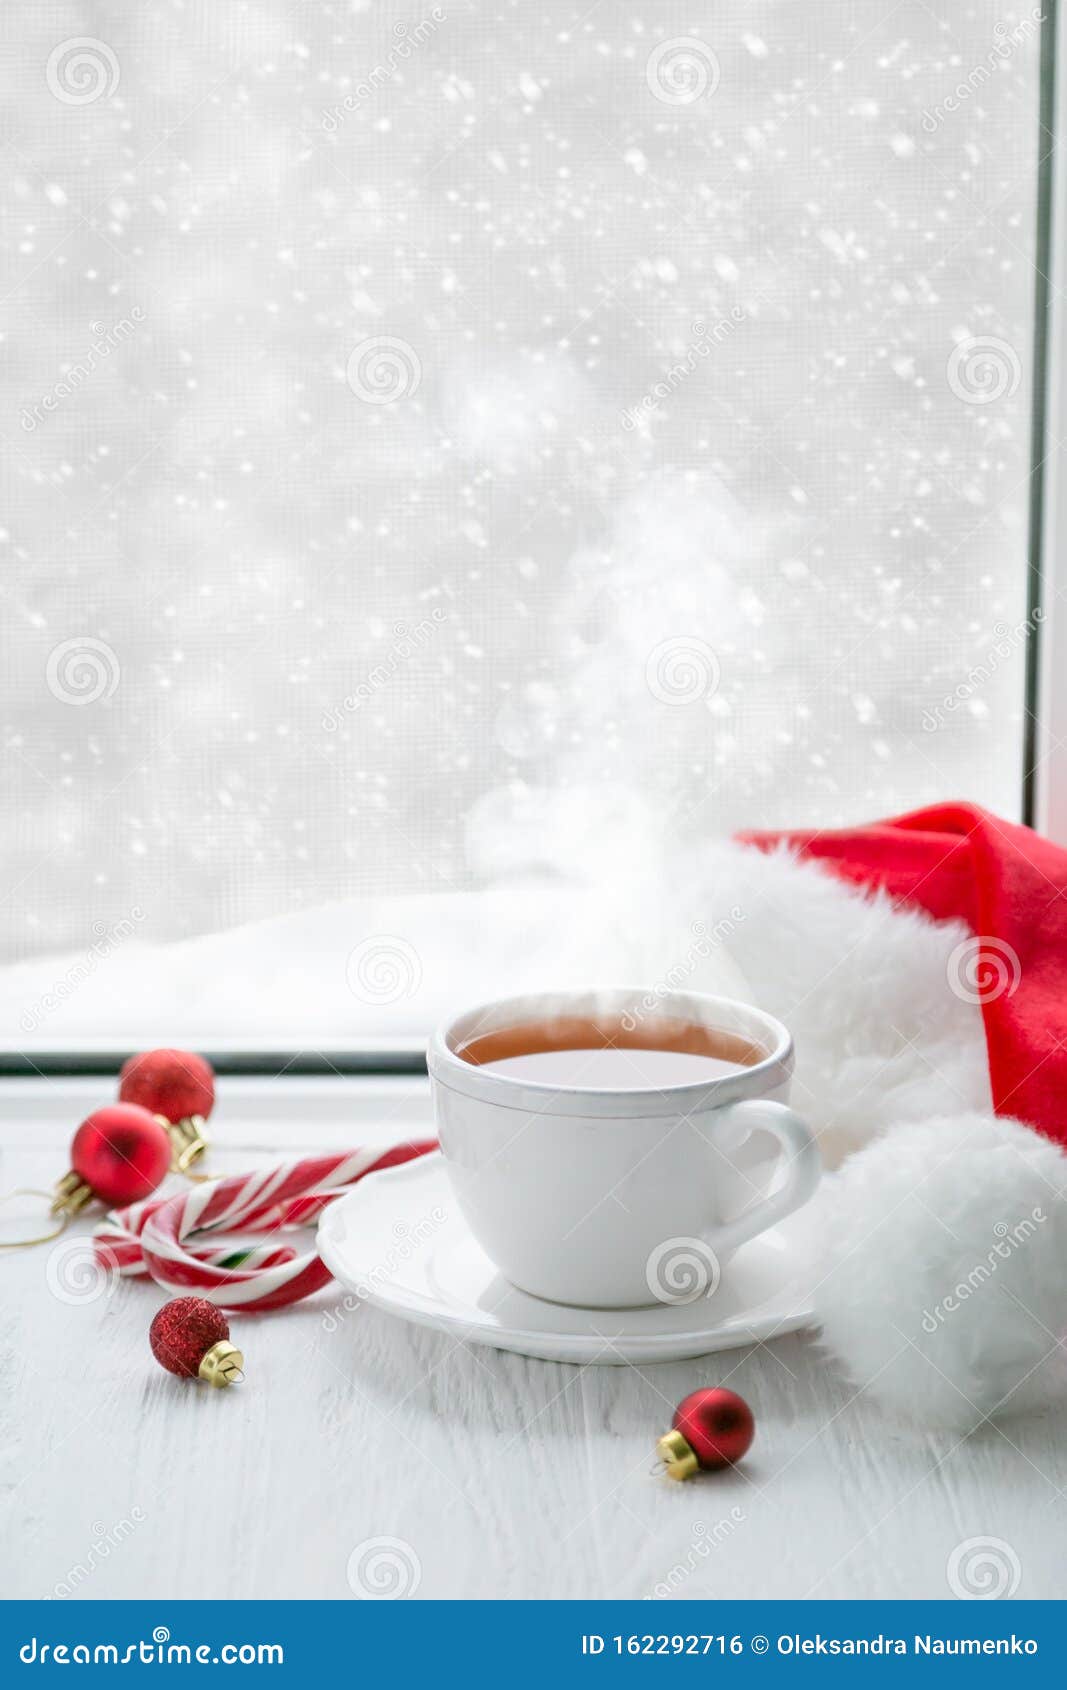 Hot chocolate at window